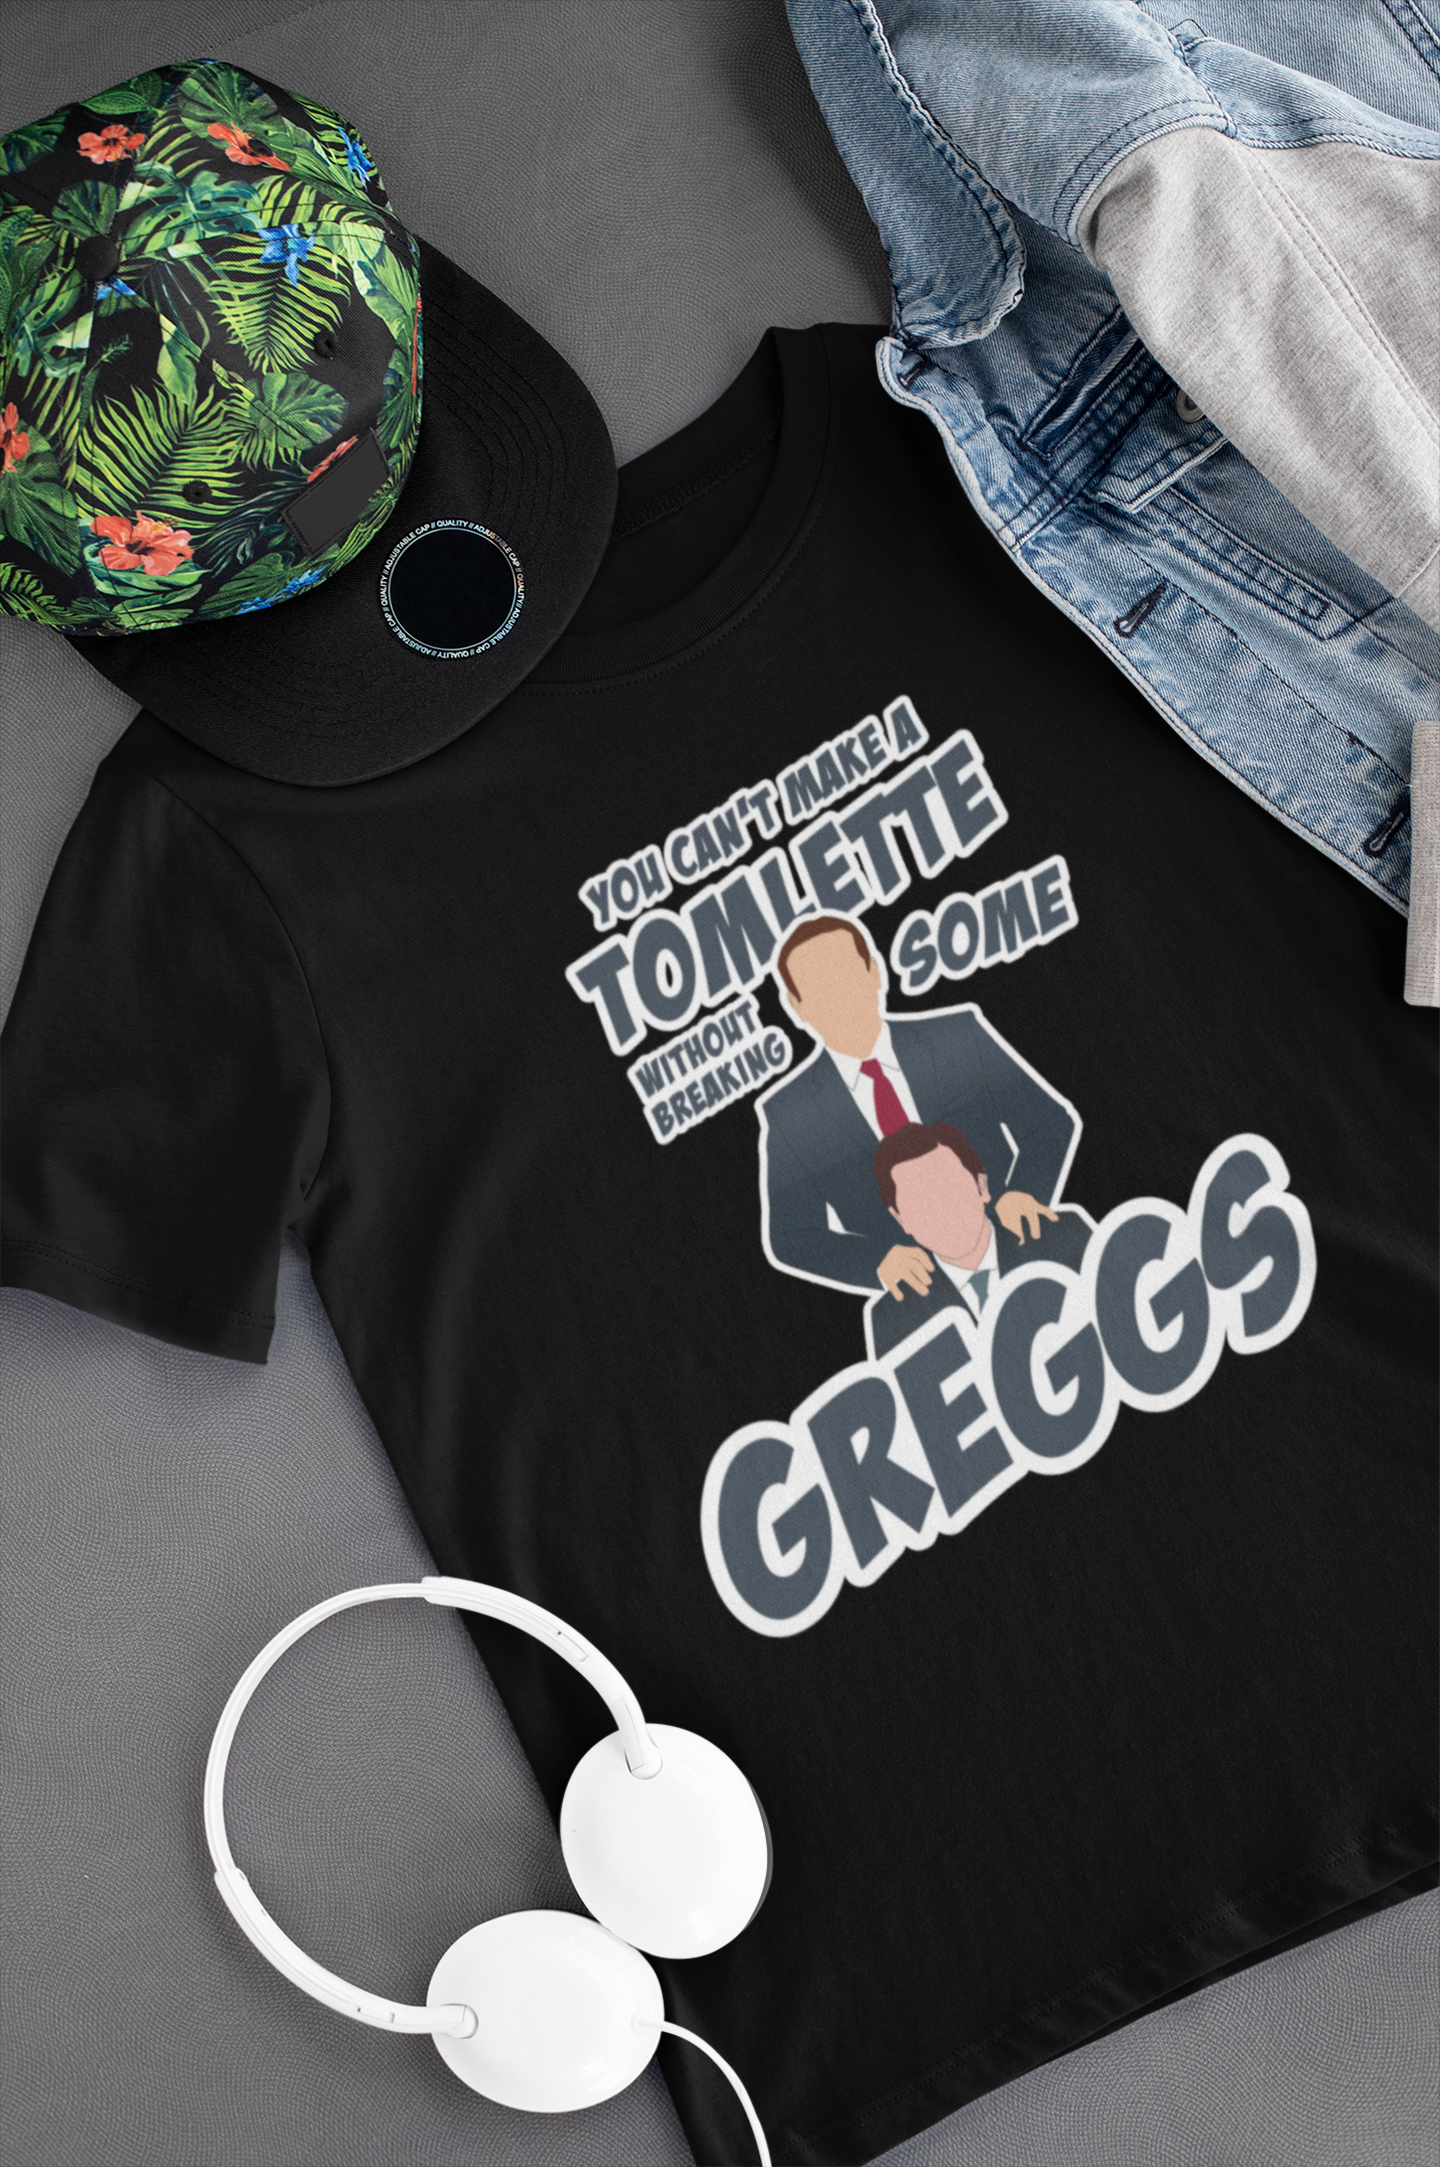 Camiseta "Tomlette & Greggs" - Succession - Séries de TV